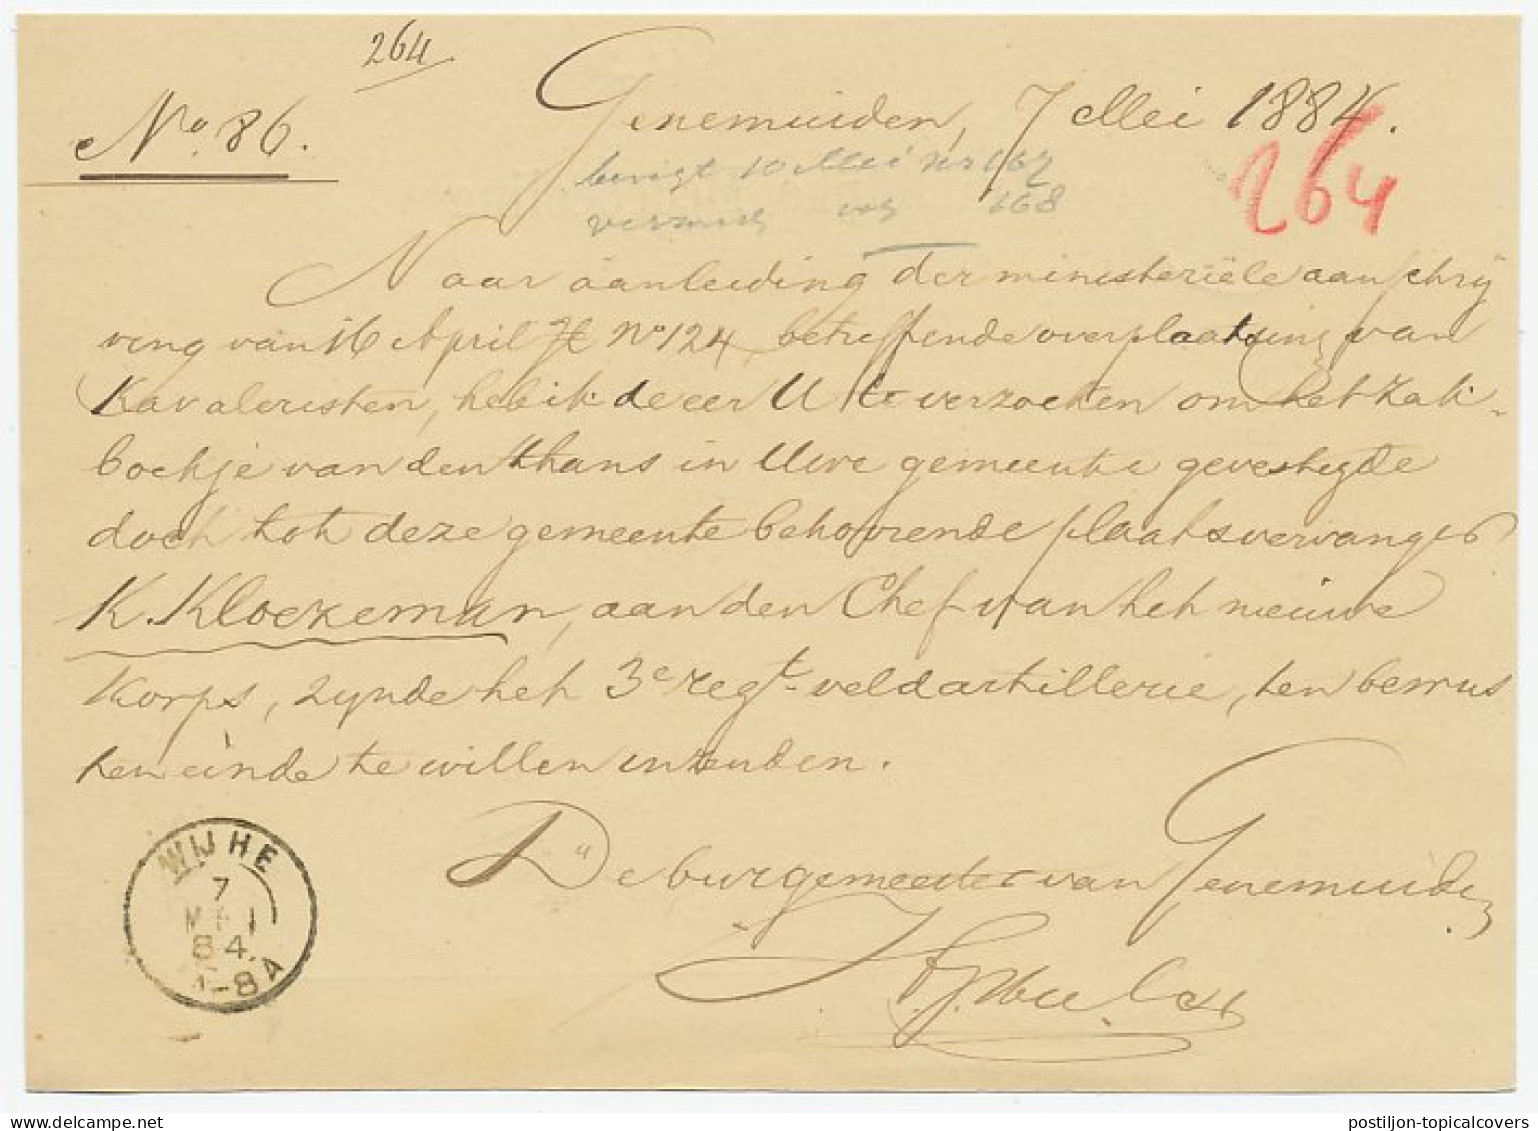 Naamstempel Genemuiden 1884 - Covers & Documents